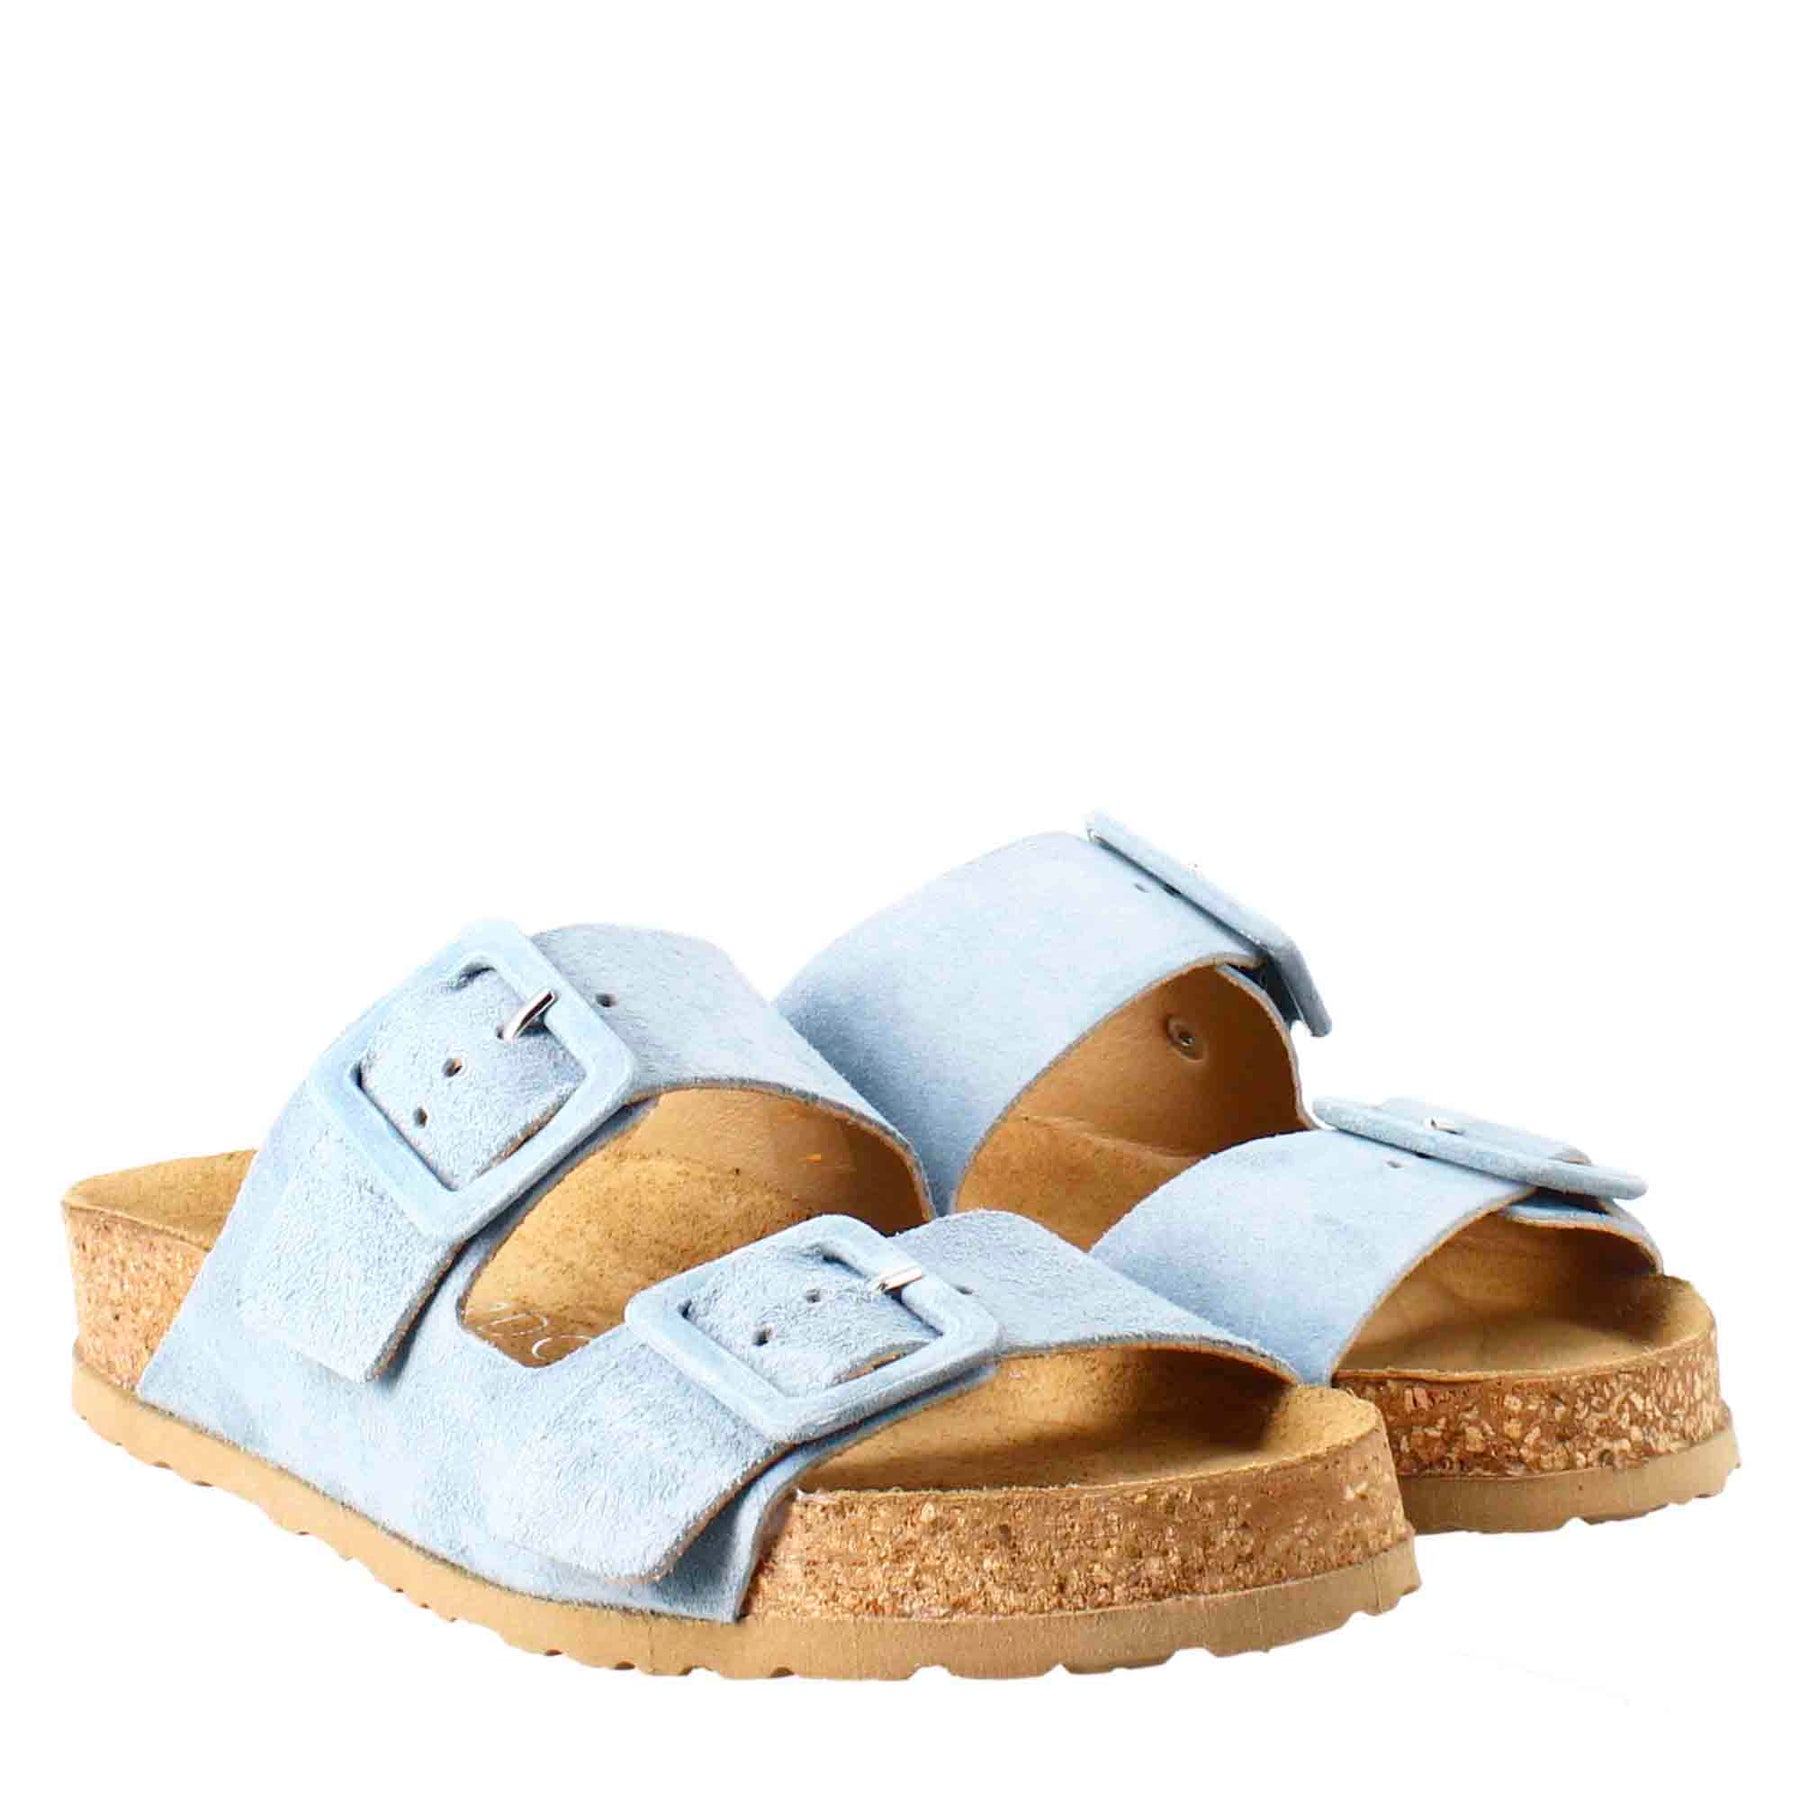 Woman's double buckle sandal in light blue suede